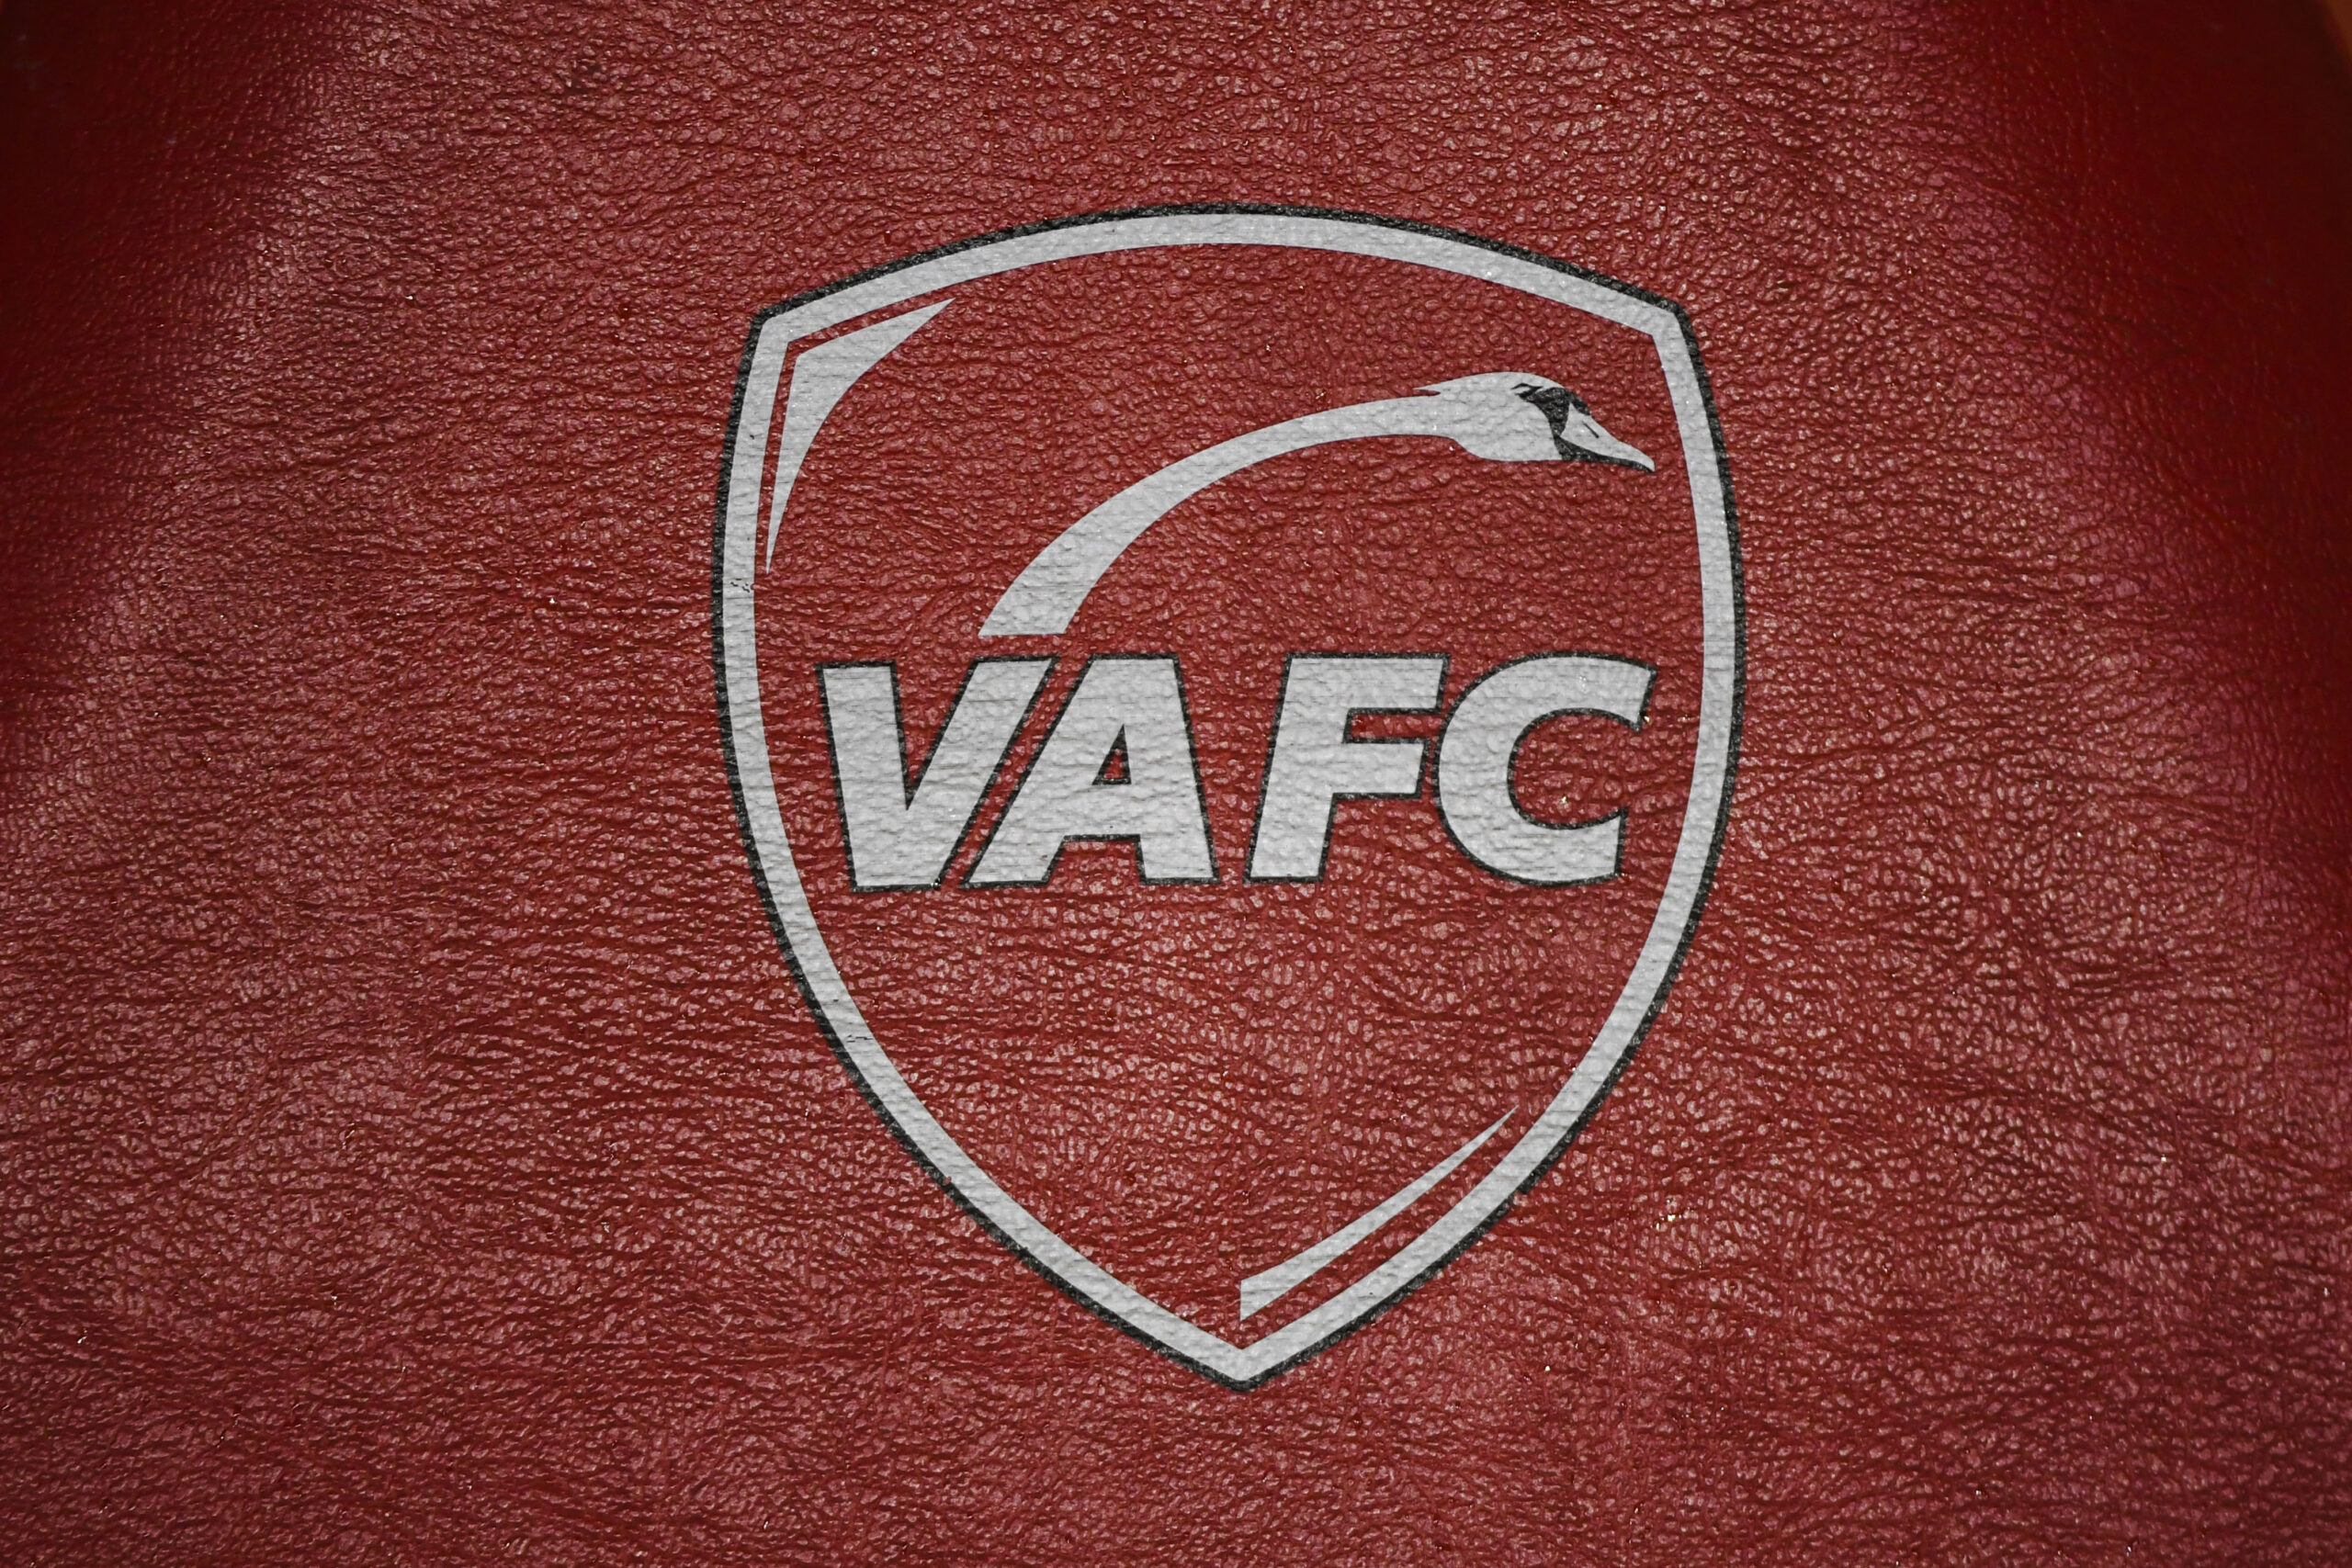 VAFC Logo